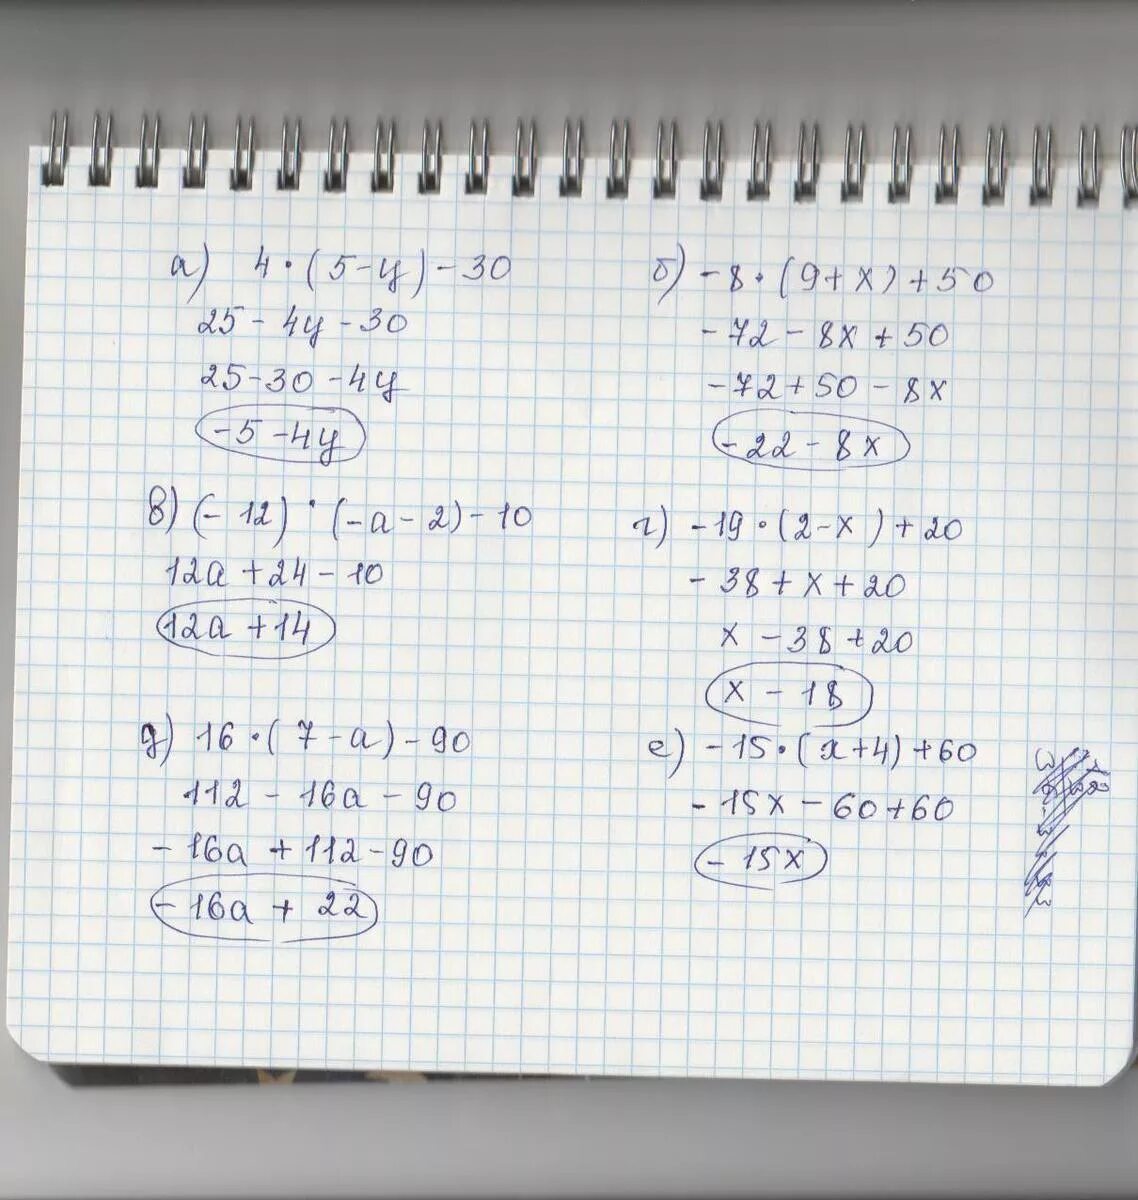 9x 10 5x 2 20 решите. 20-3(Х-5)<16-7х. 5/4-Х+5/Х=10/5. Решение 5х+12=60. 4нвк 60-12-19.